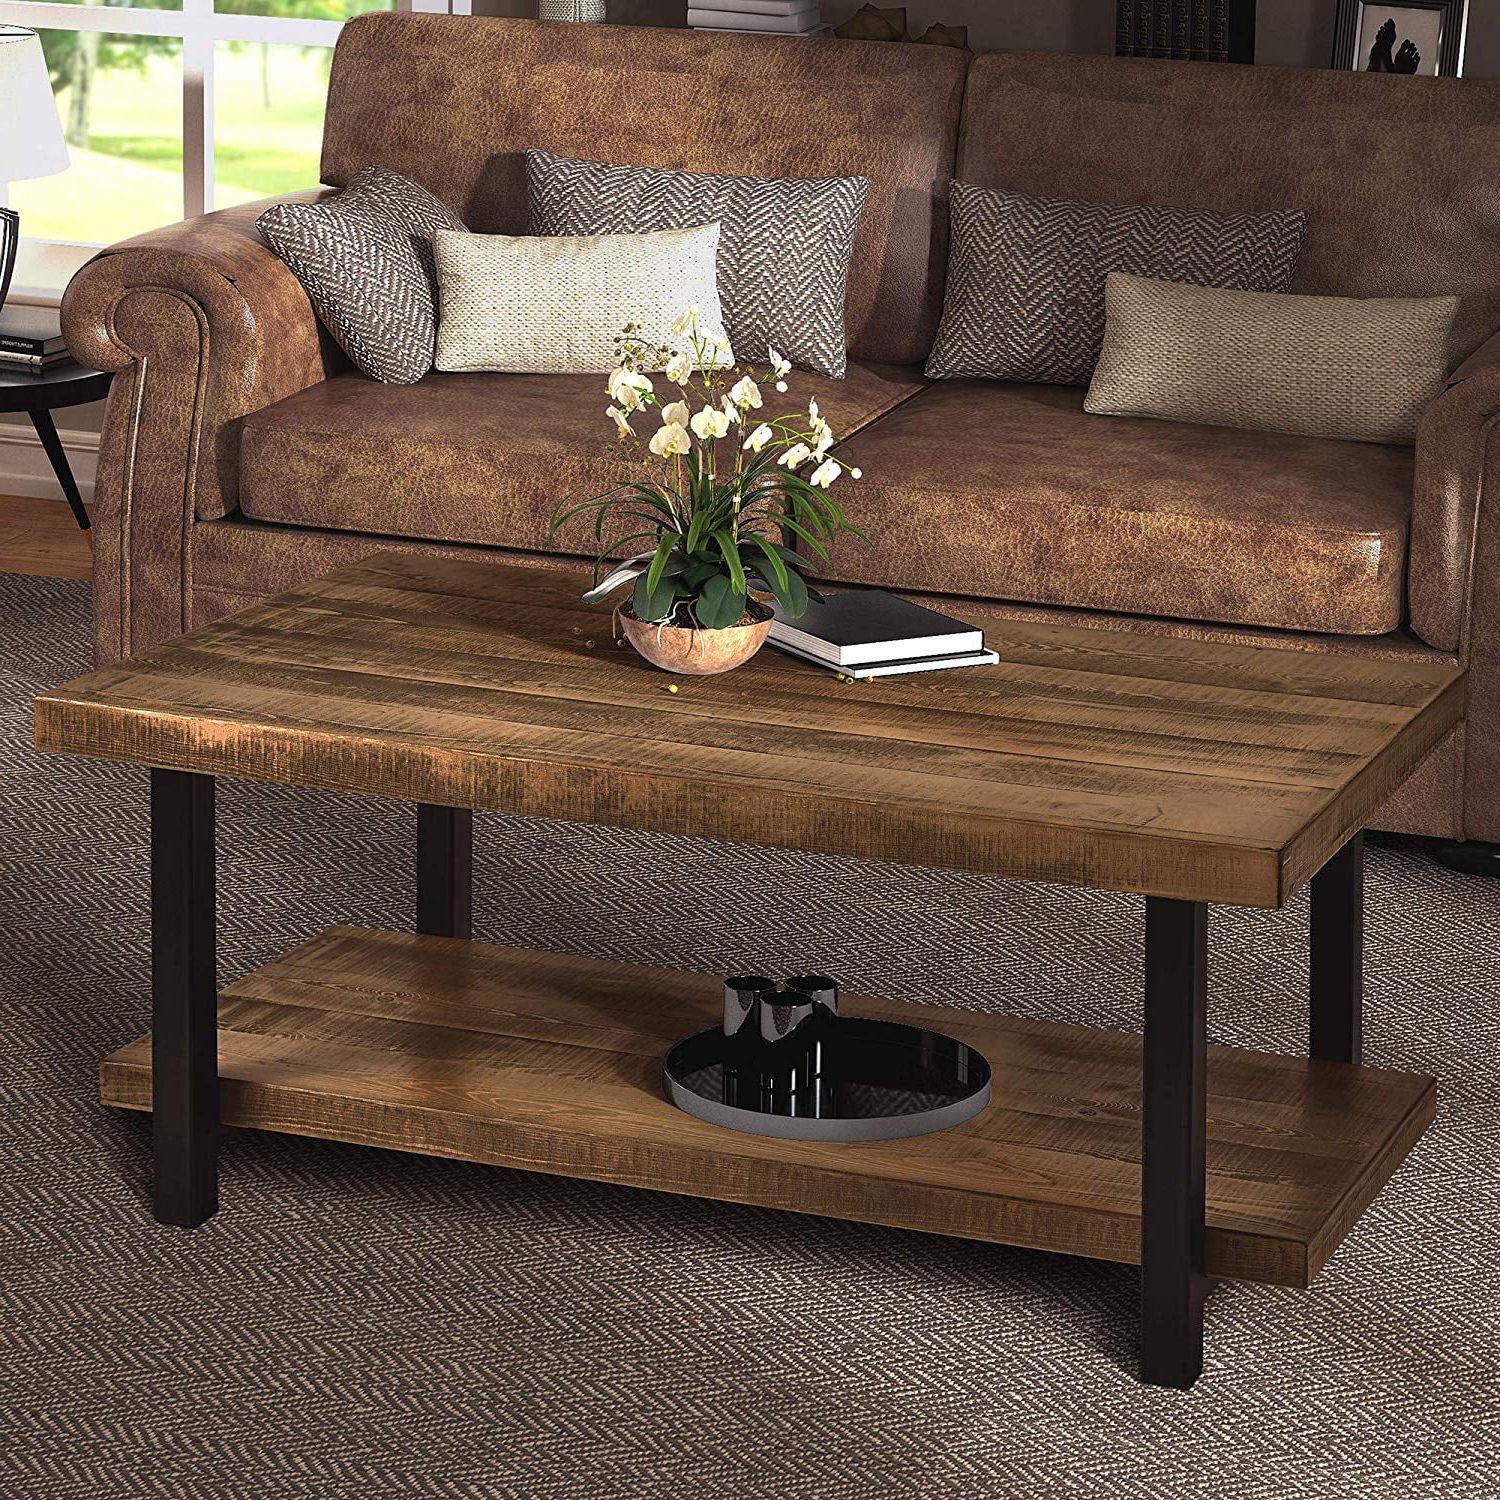 Harper&bright Designs Industrial Rectangular Pine Wood Coffee Table Regarding Rustic Wood Coffee Tables (View 7 of 20)